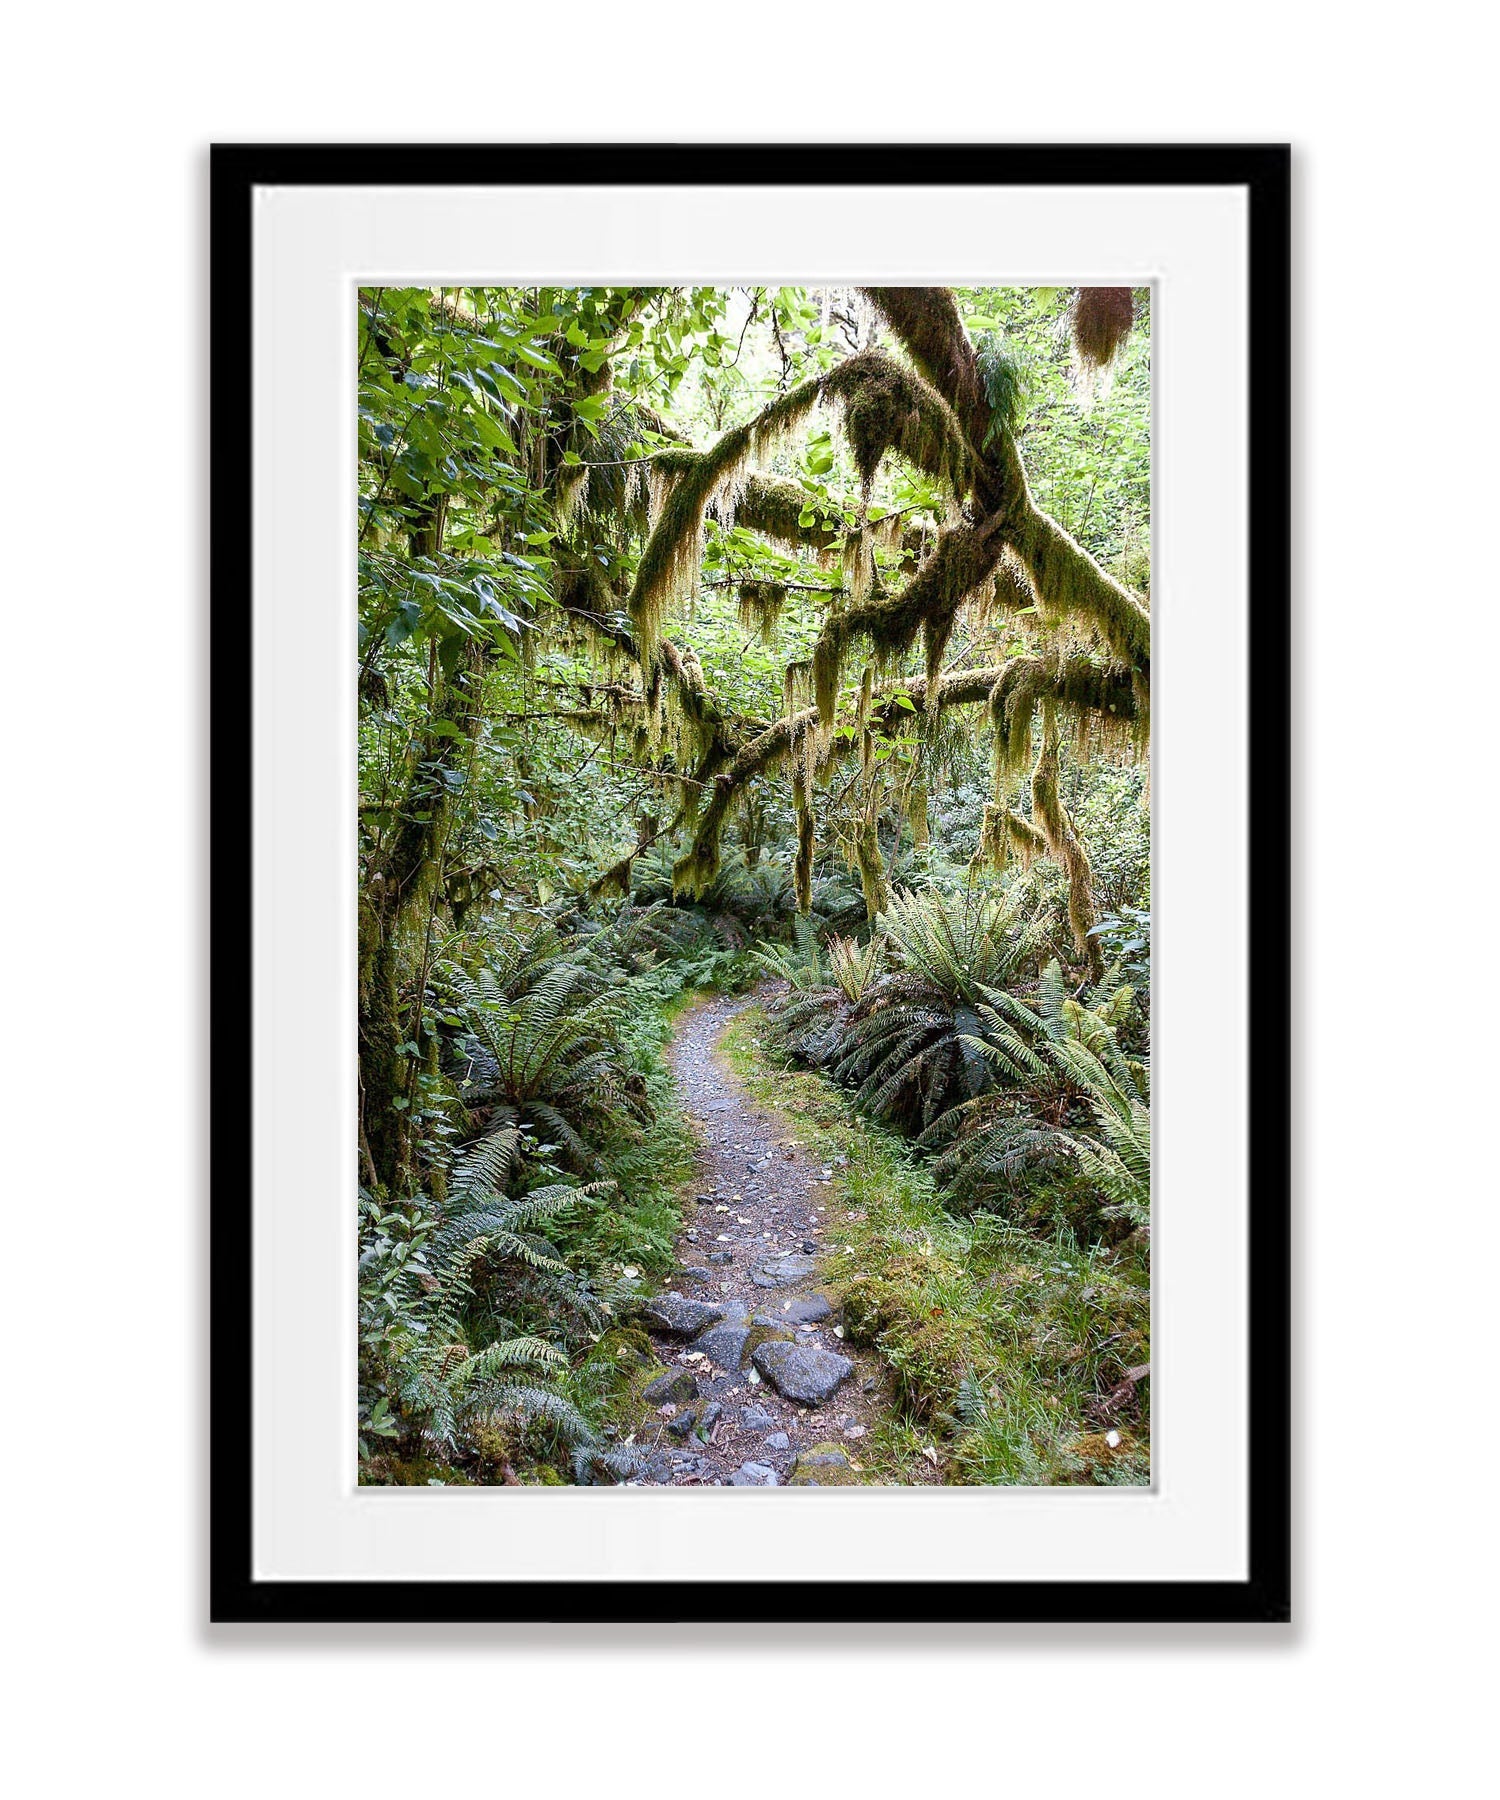 Milford Track rainforest - New Zealand